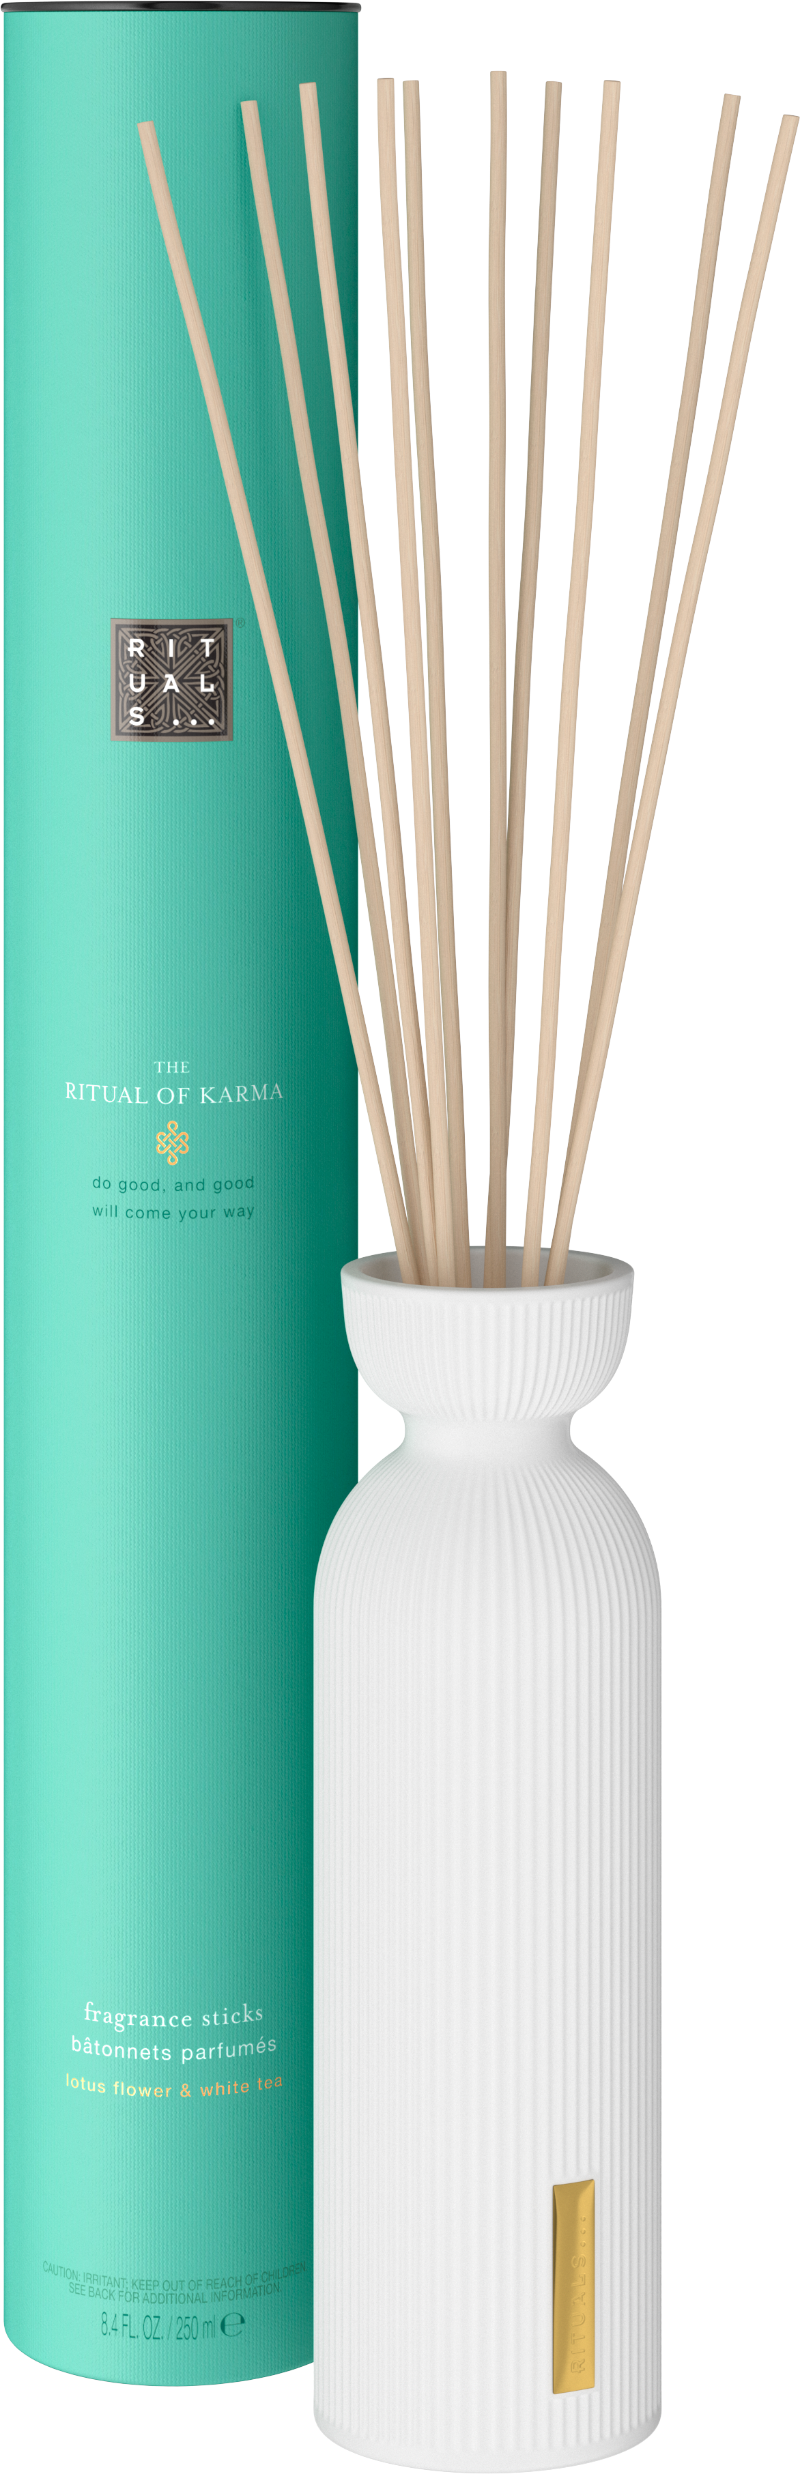 Rituals - The Ritual of Karma Fragrance Sticks 250 ml